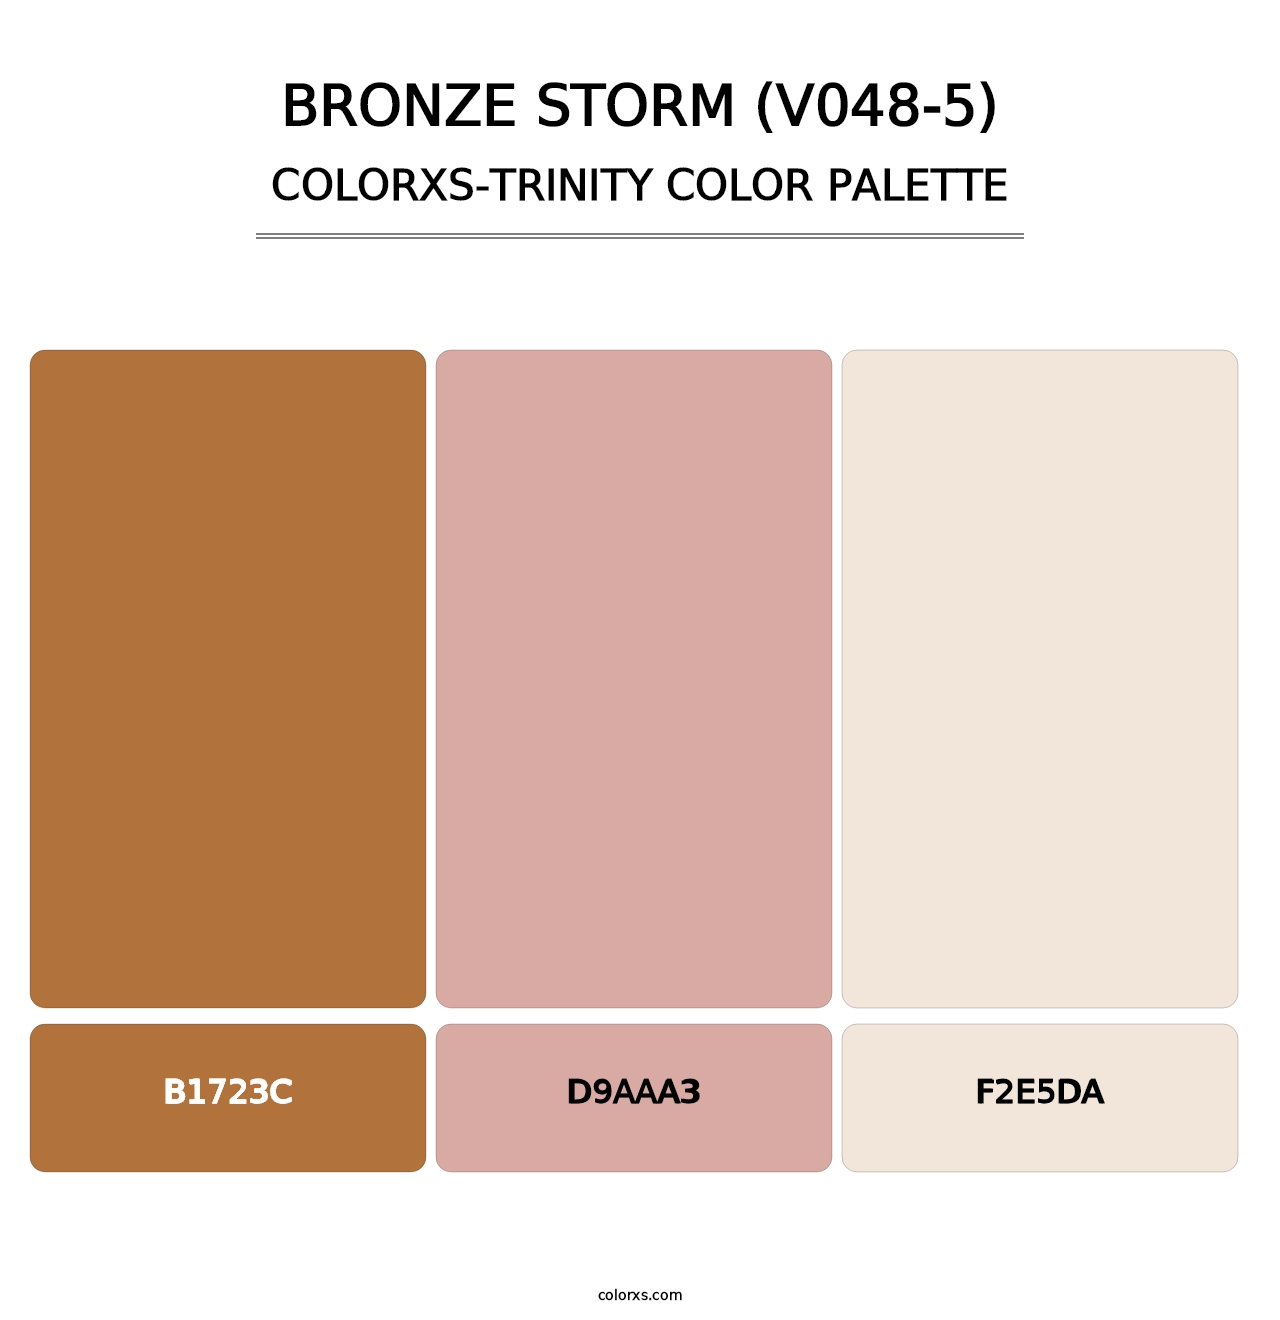 Bronze Storm (V048-5) - Colorxs Trinity Palette